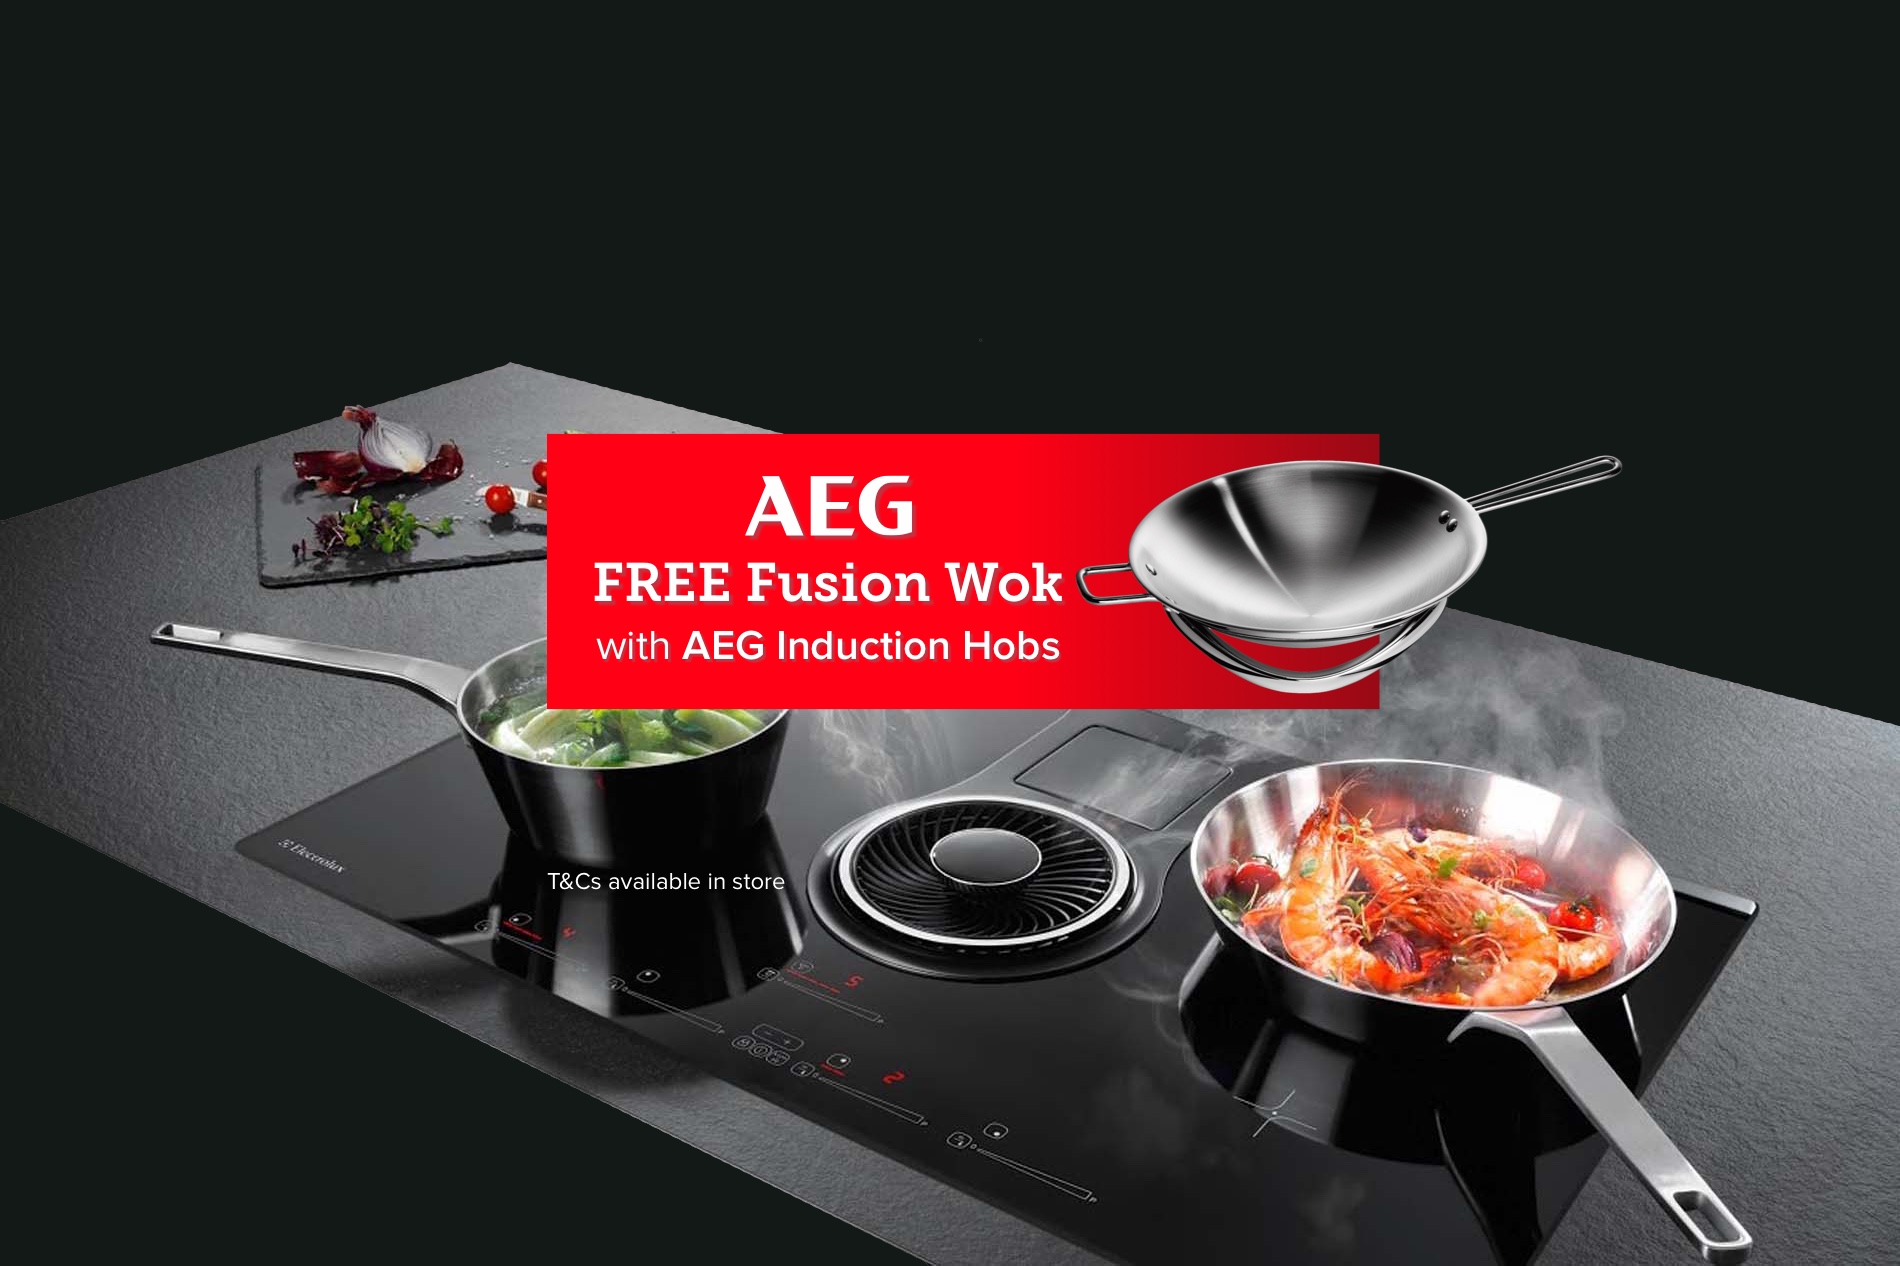 Free AEG Fusion Wok worth £149